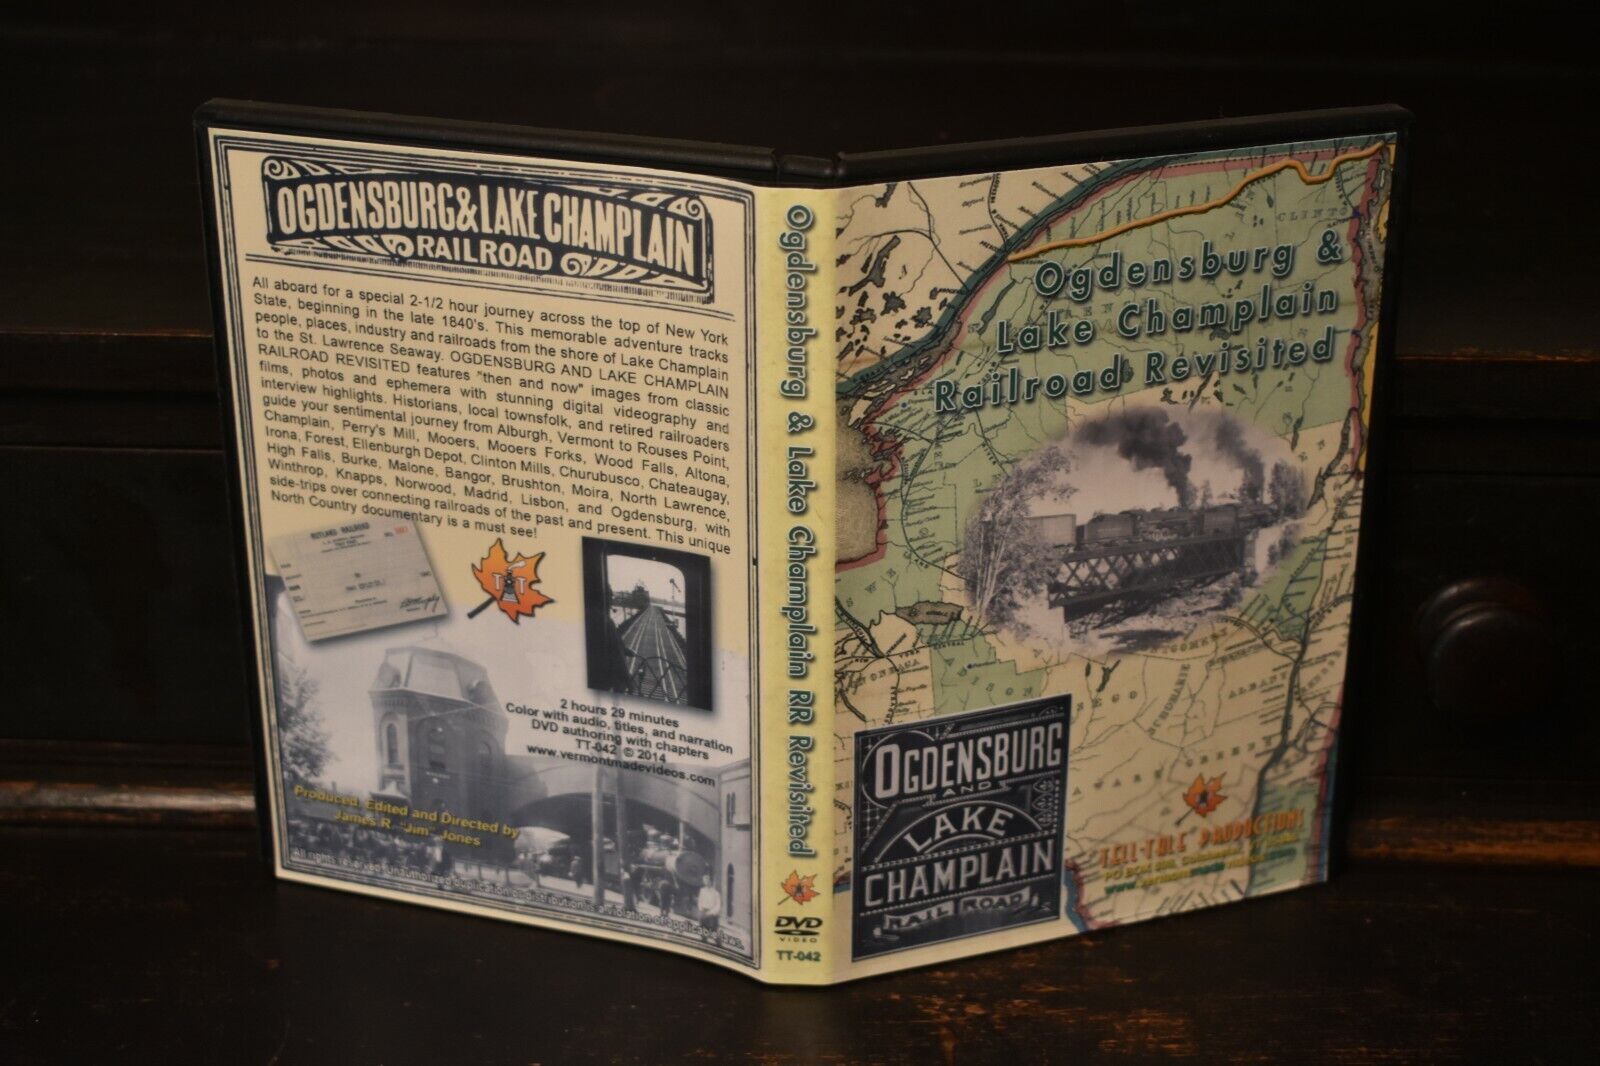 Ogdensburg &  Lake Champlain Railroad Revisited (RUTLAND RR) New York